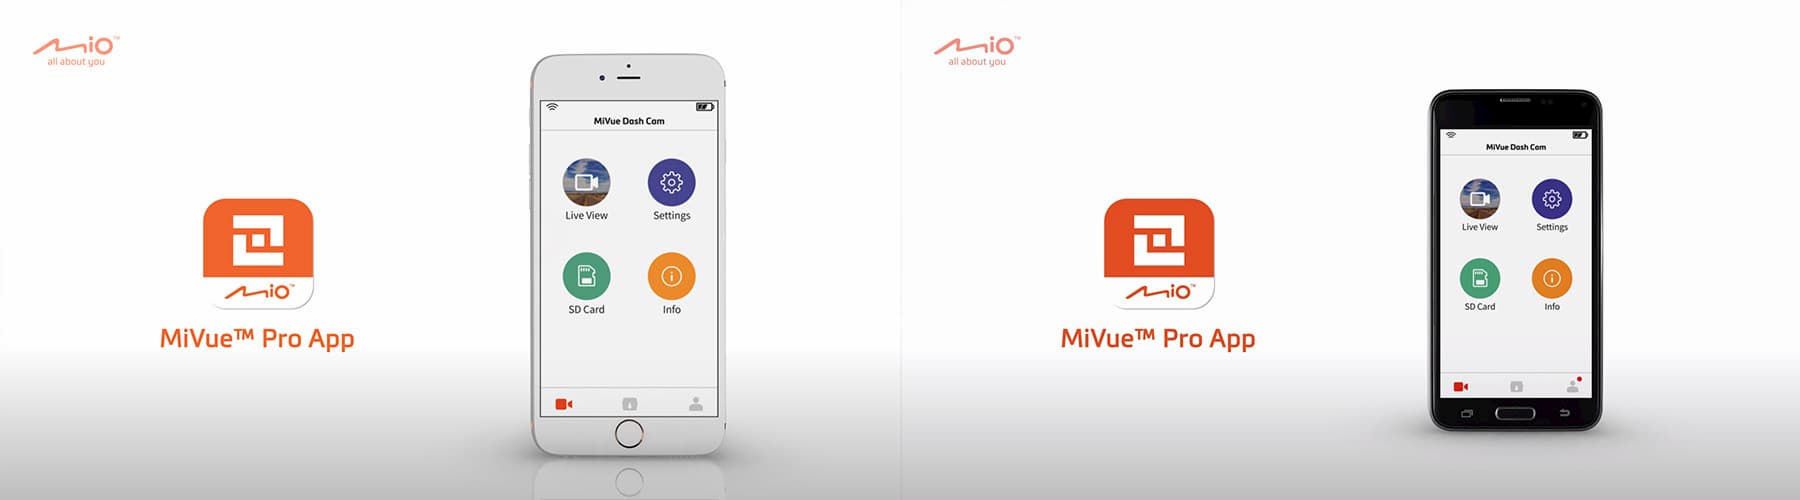 MioMivue-Pro-App動畫設計影片-4